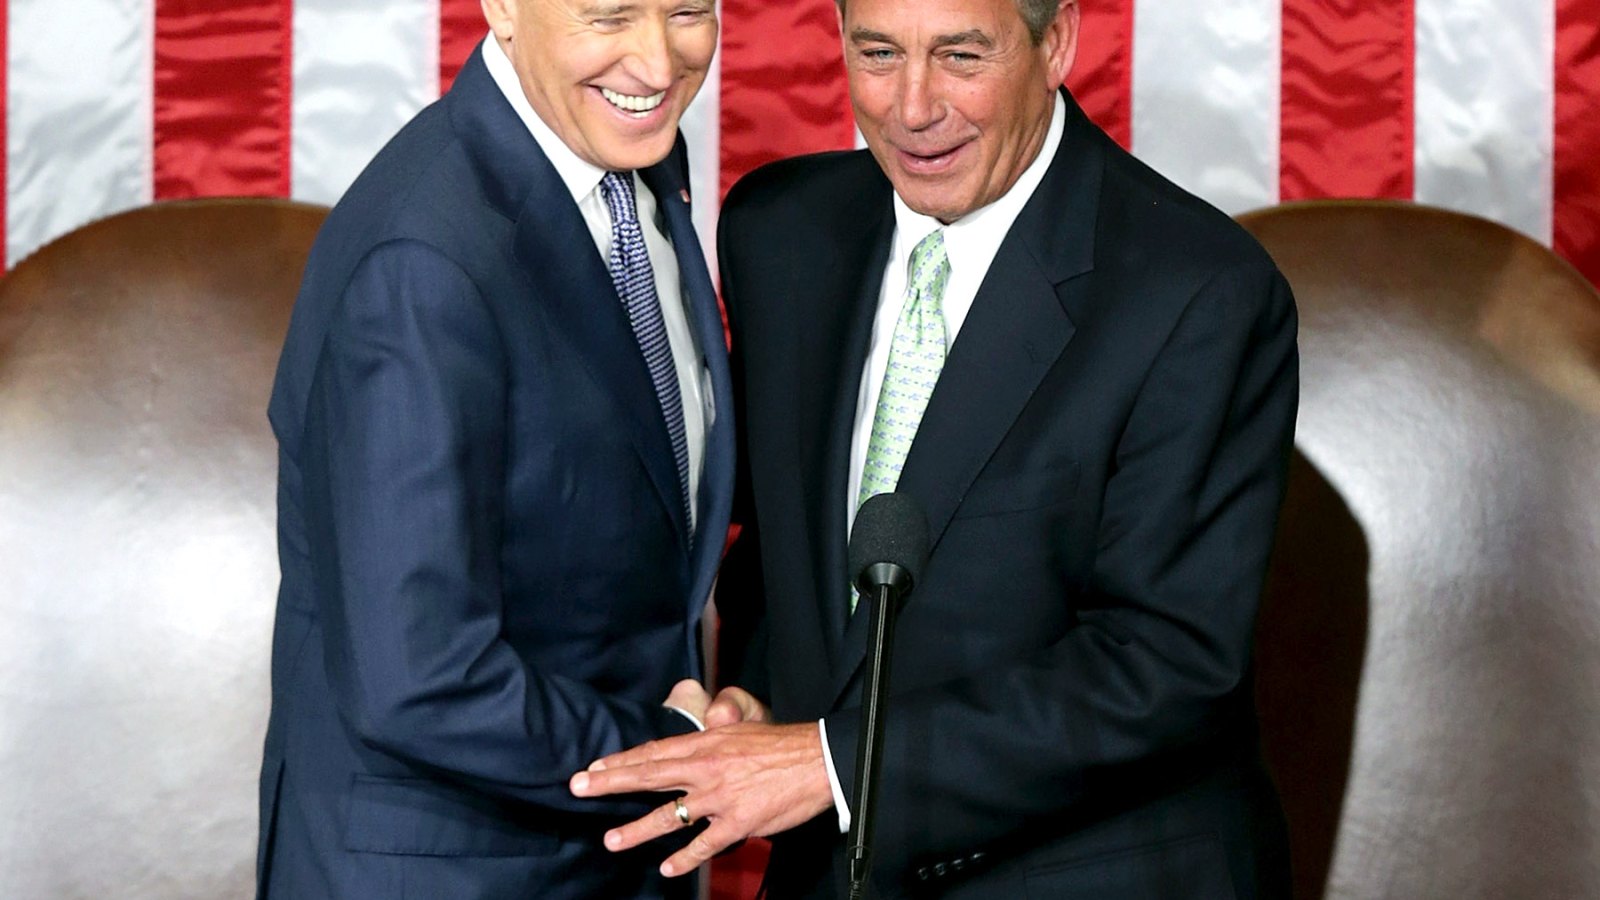 Joe Biden and John Boehner during the State of the Union address